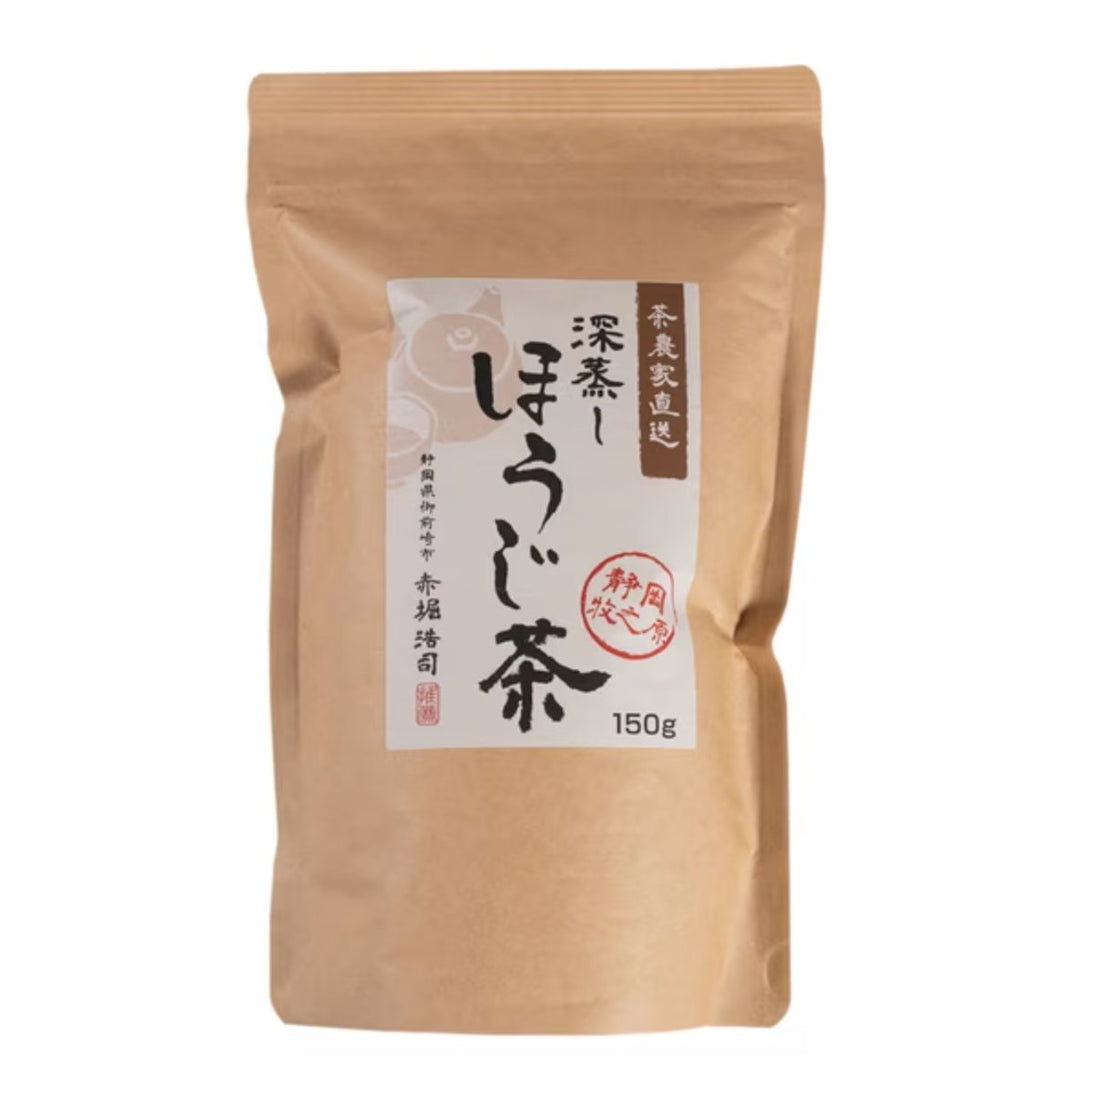 Akahori Shoten tea farmer direct delivery deep steamed hojicha 150g - NihonMura